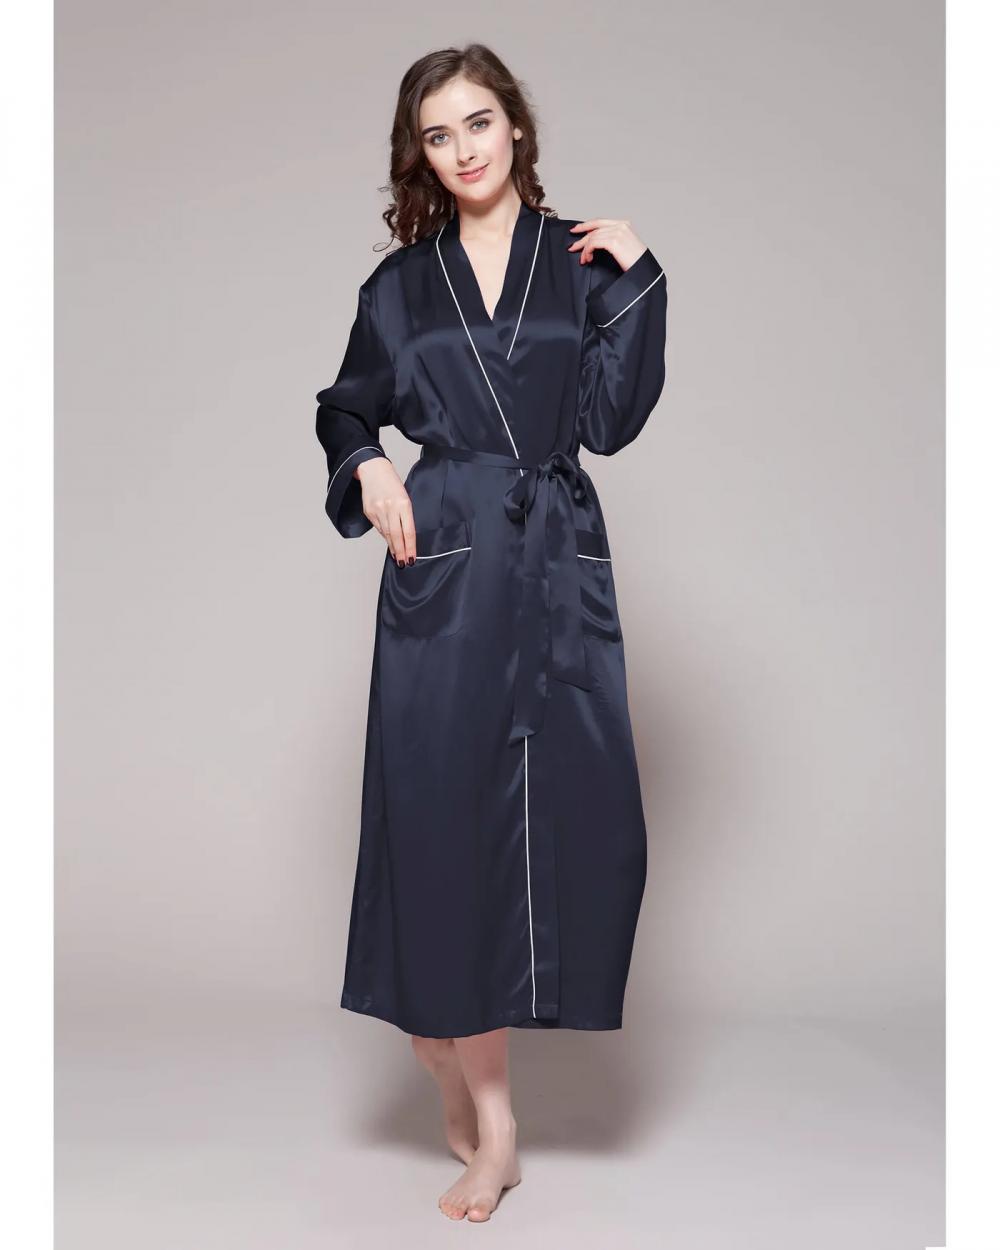 19 Momme Contra Trim And Full Length Women's Silk Robe Silky Kimono Bathrobe for Bride Bridesmaids Wedding Party Loungewear Long